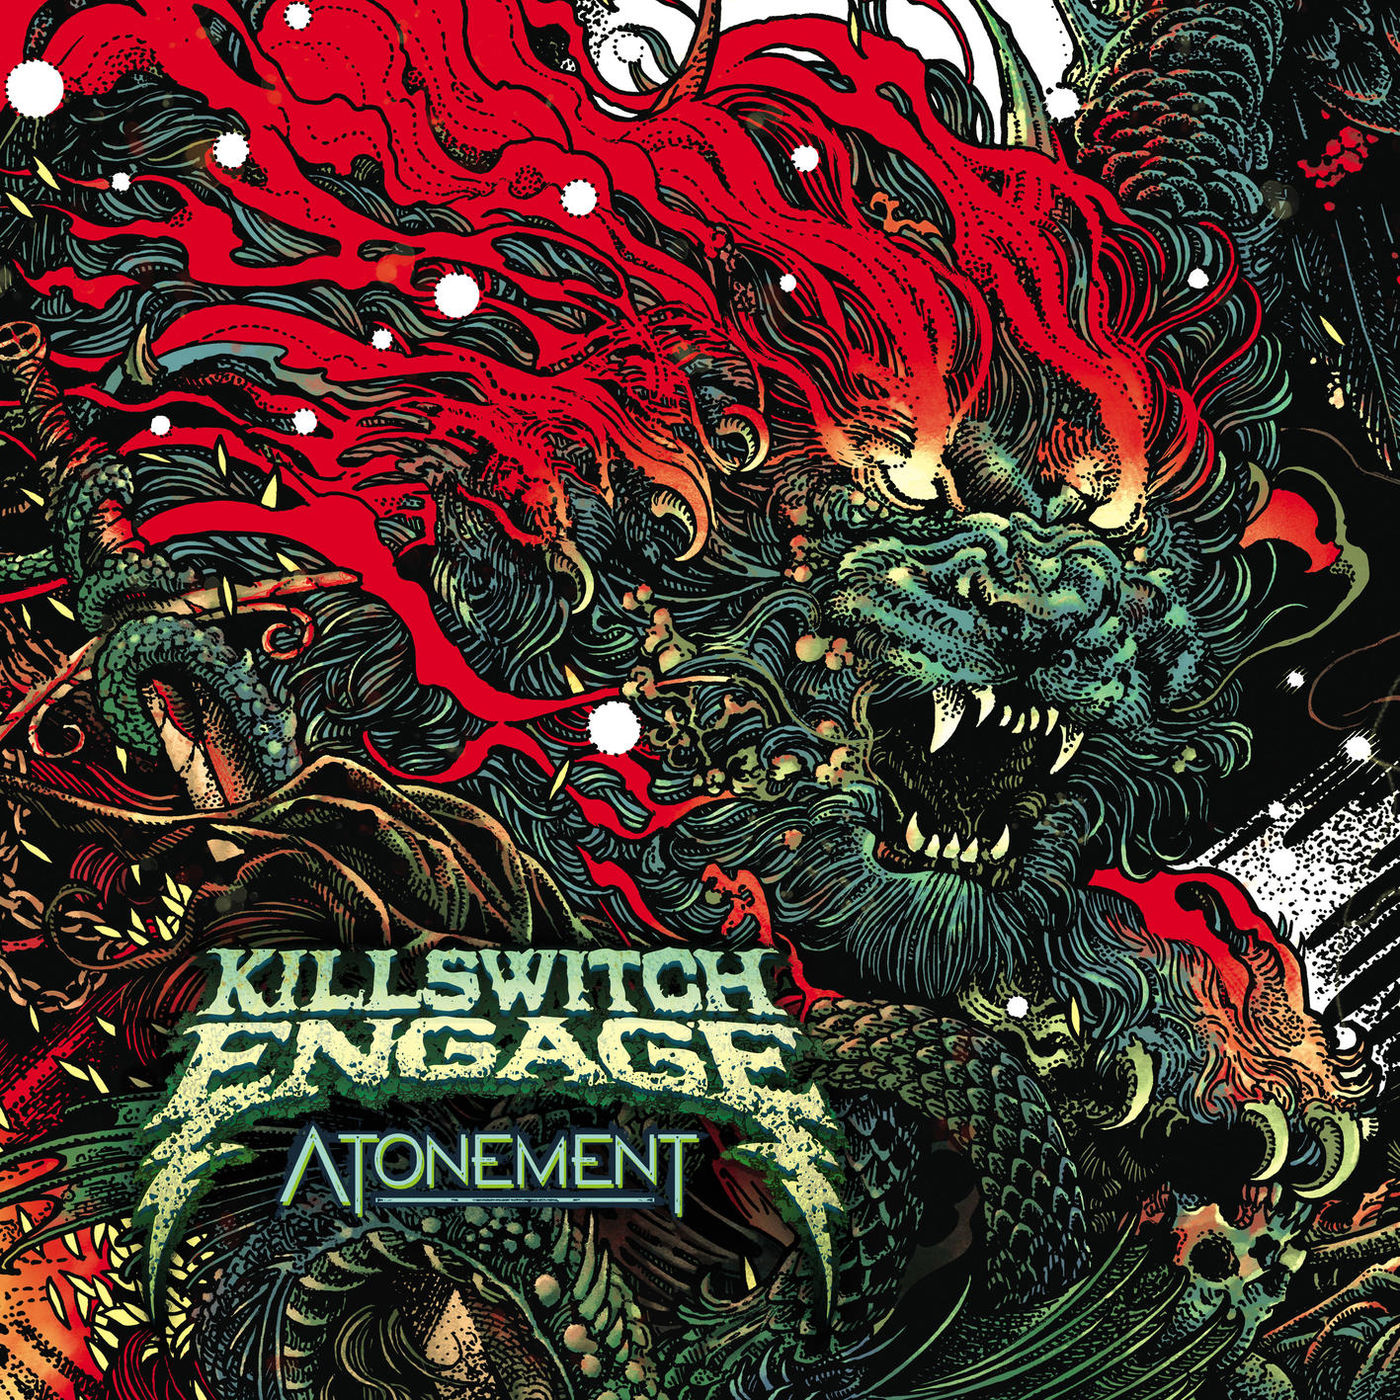 Killswitch Engage - I Am Broken Too [single] (2019)